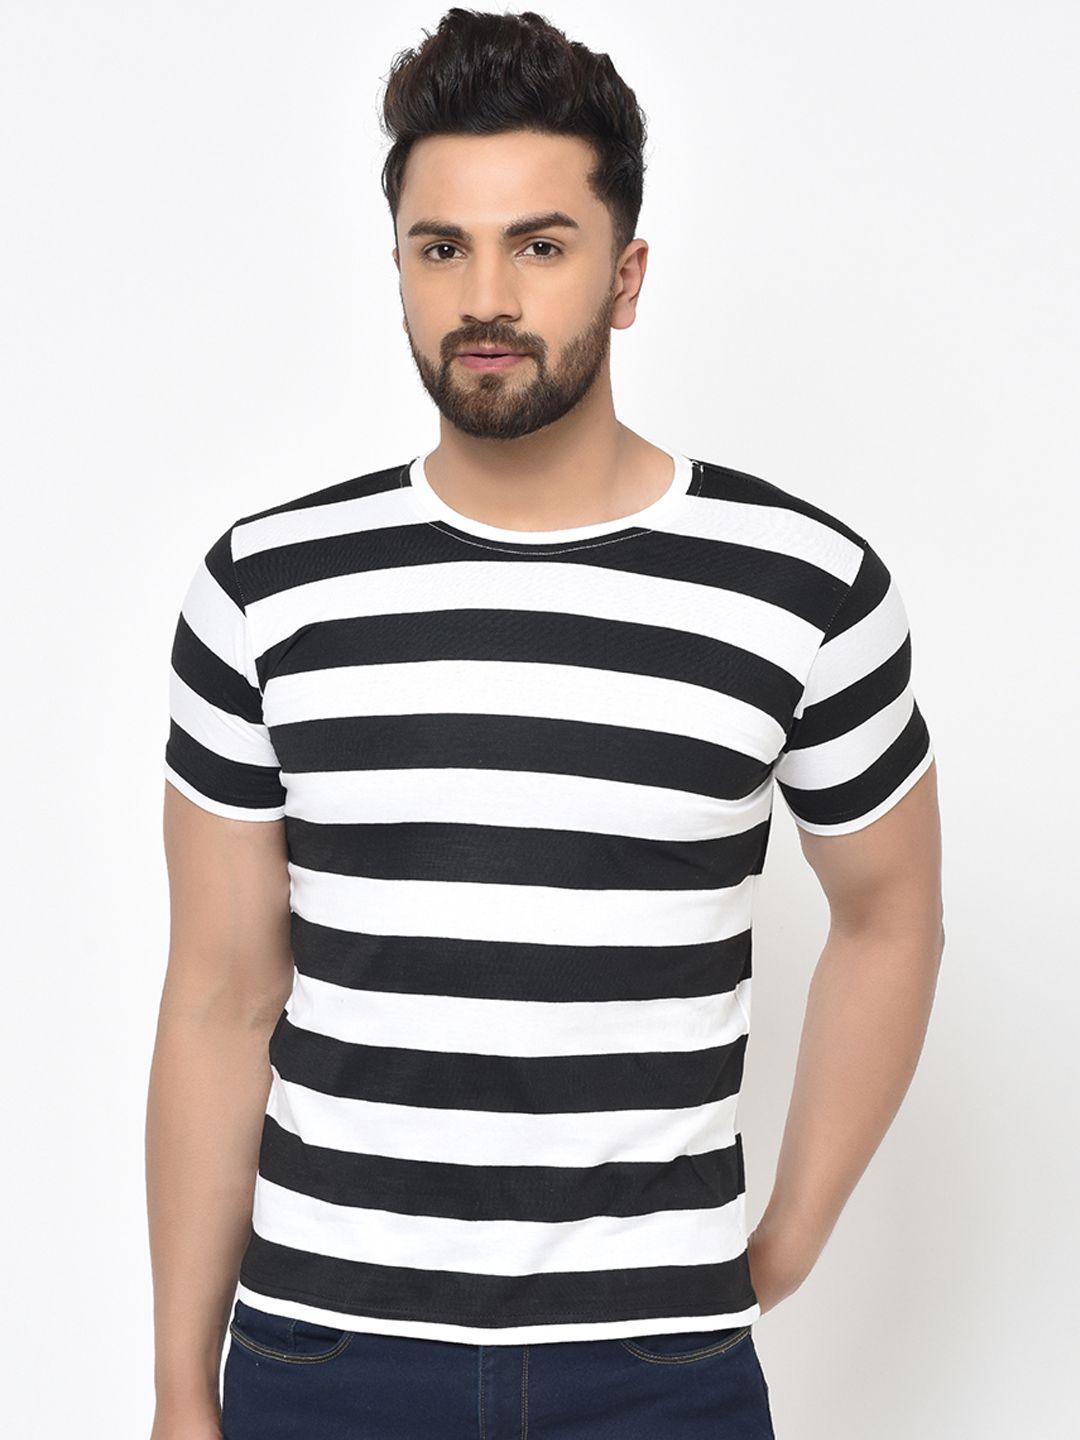 aesthetic bodies men white striped round neck t-shirt